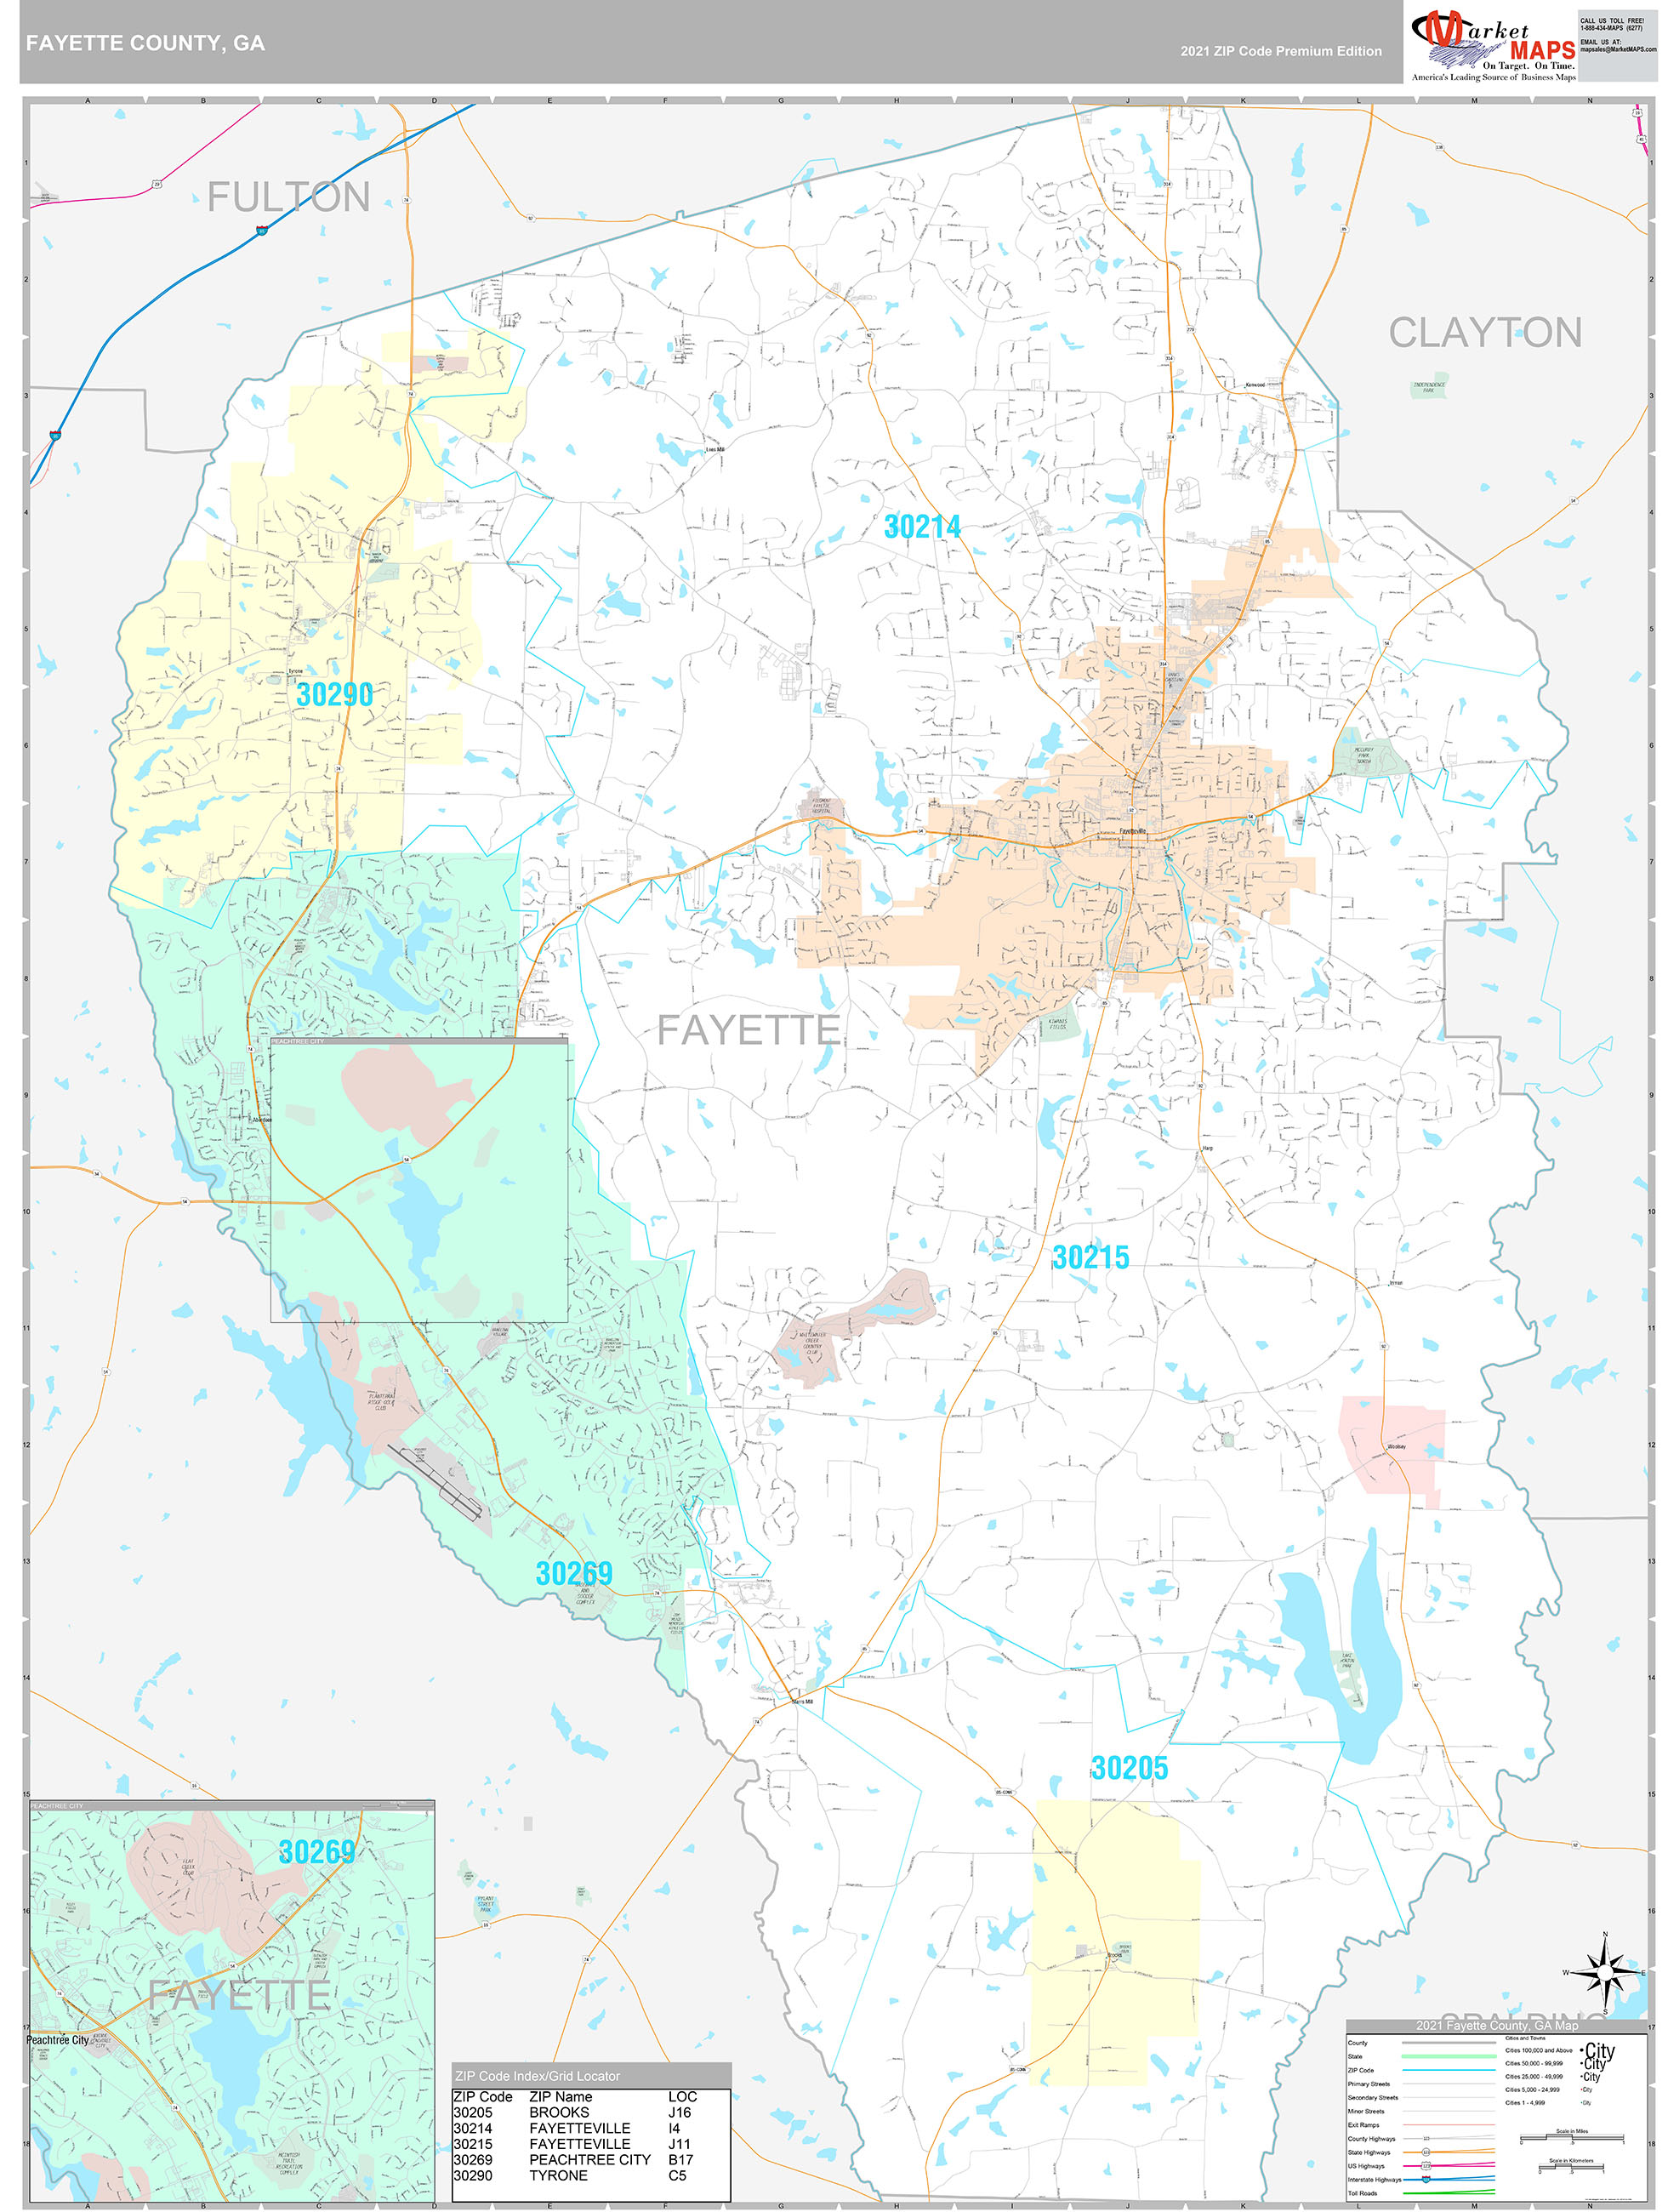 fayette-county-ga-wall-map-premium-style-by-marketmaps-mapsales